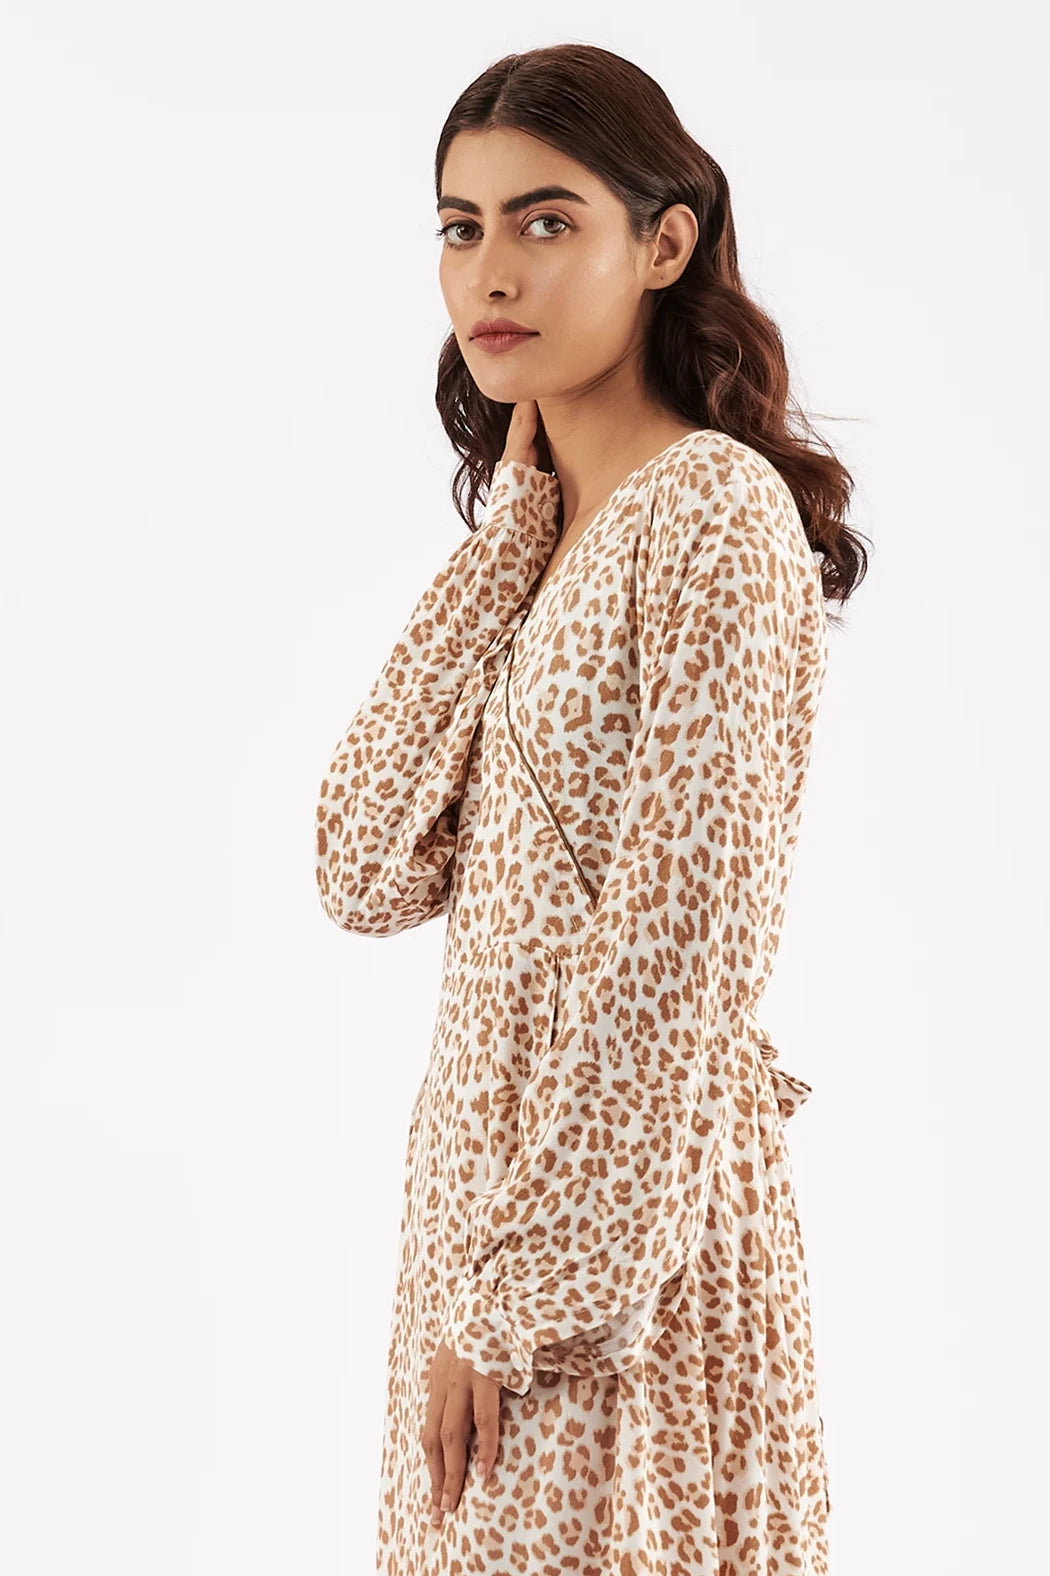 Women's Leopard Print V Neck Dress